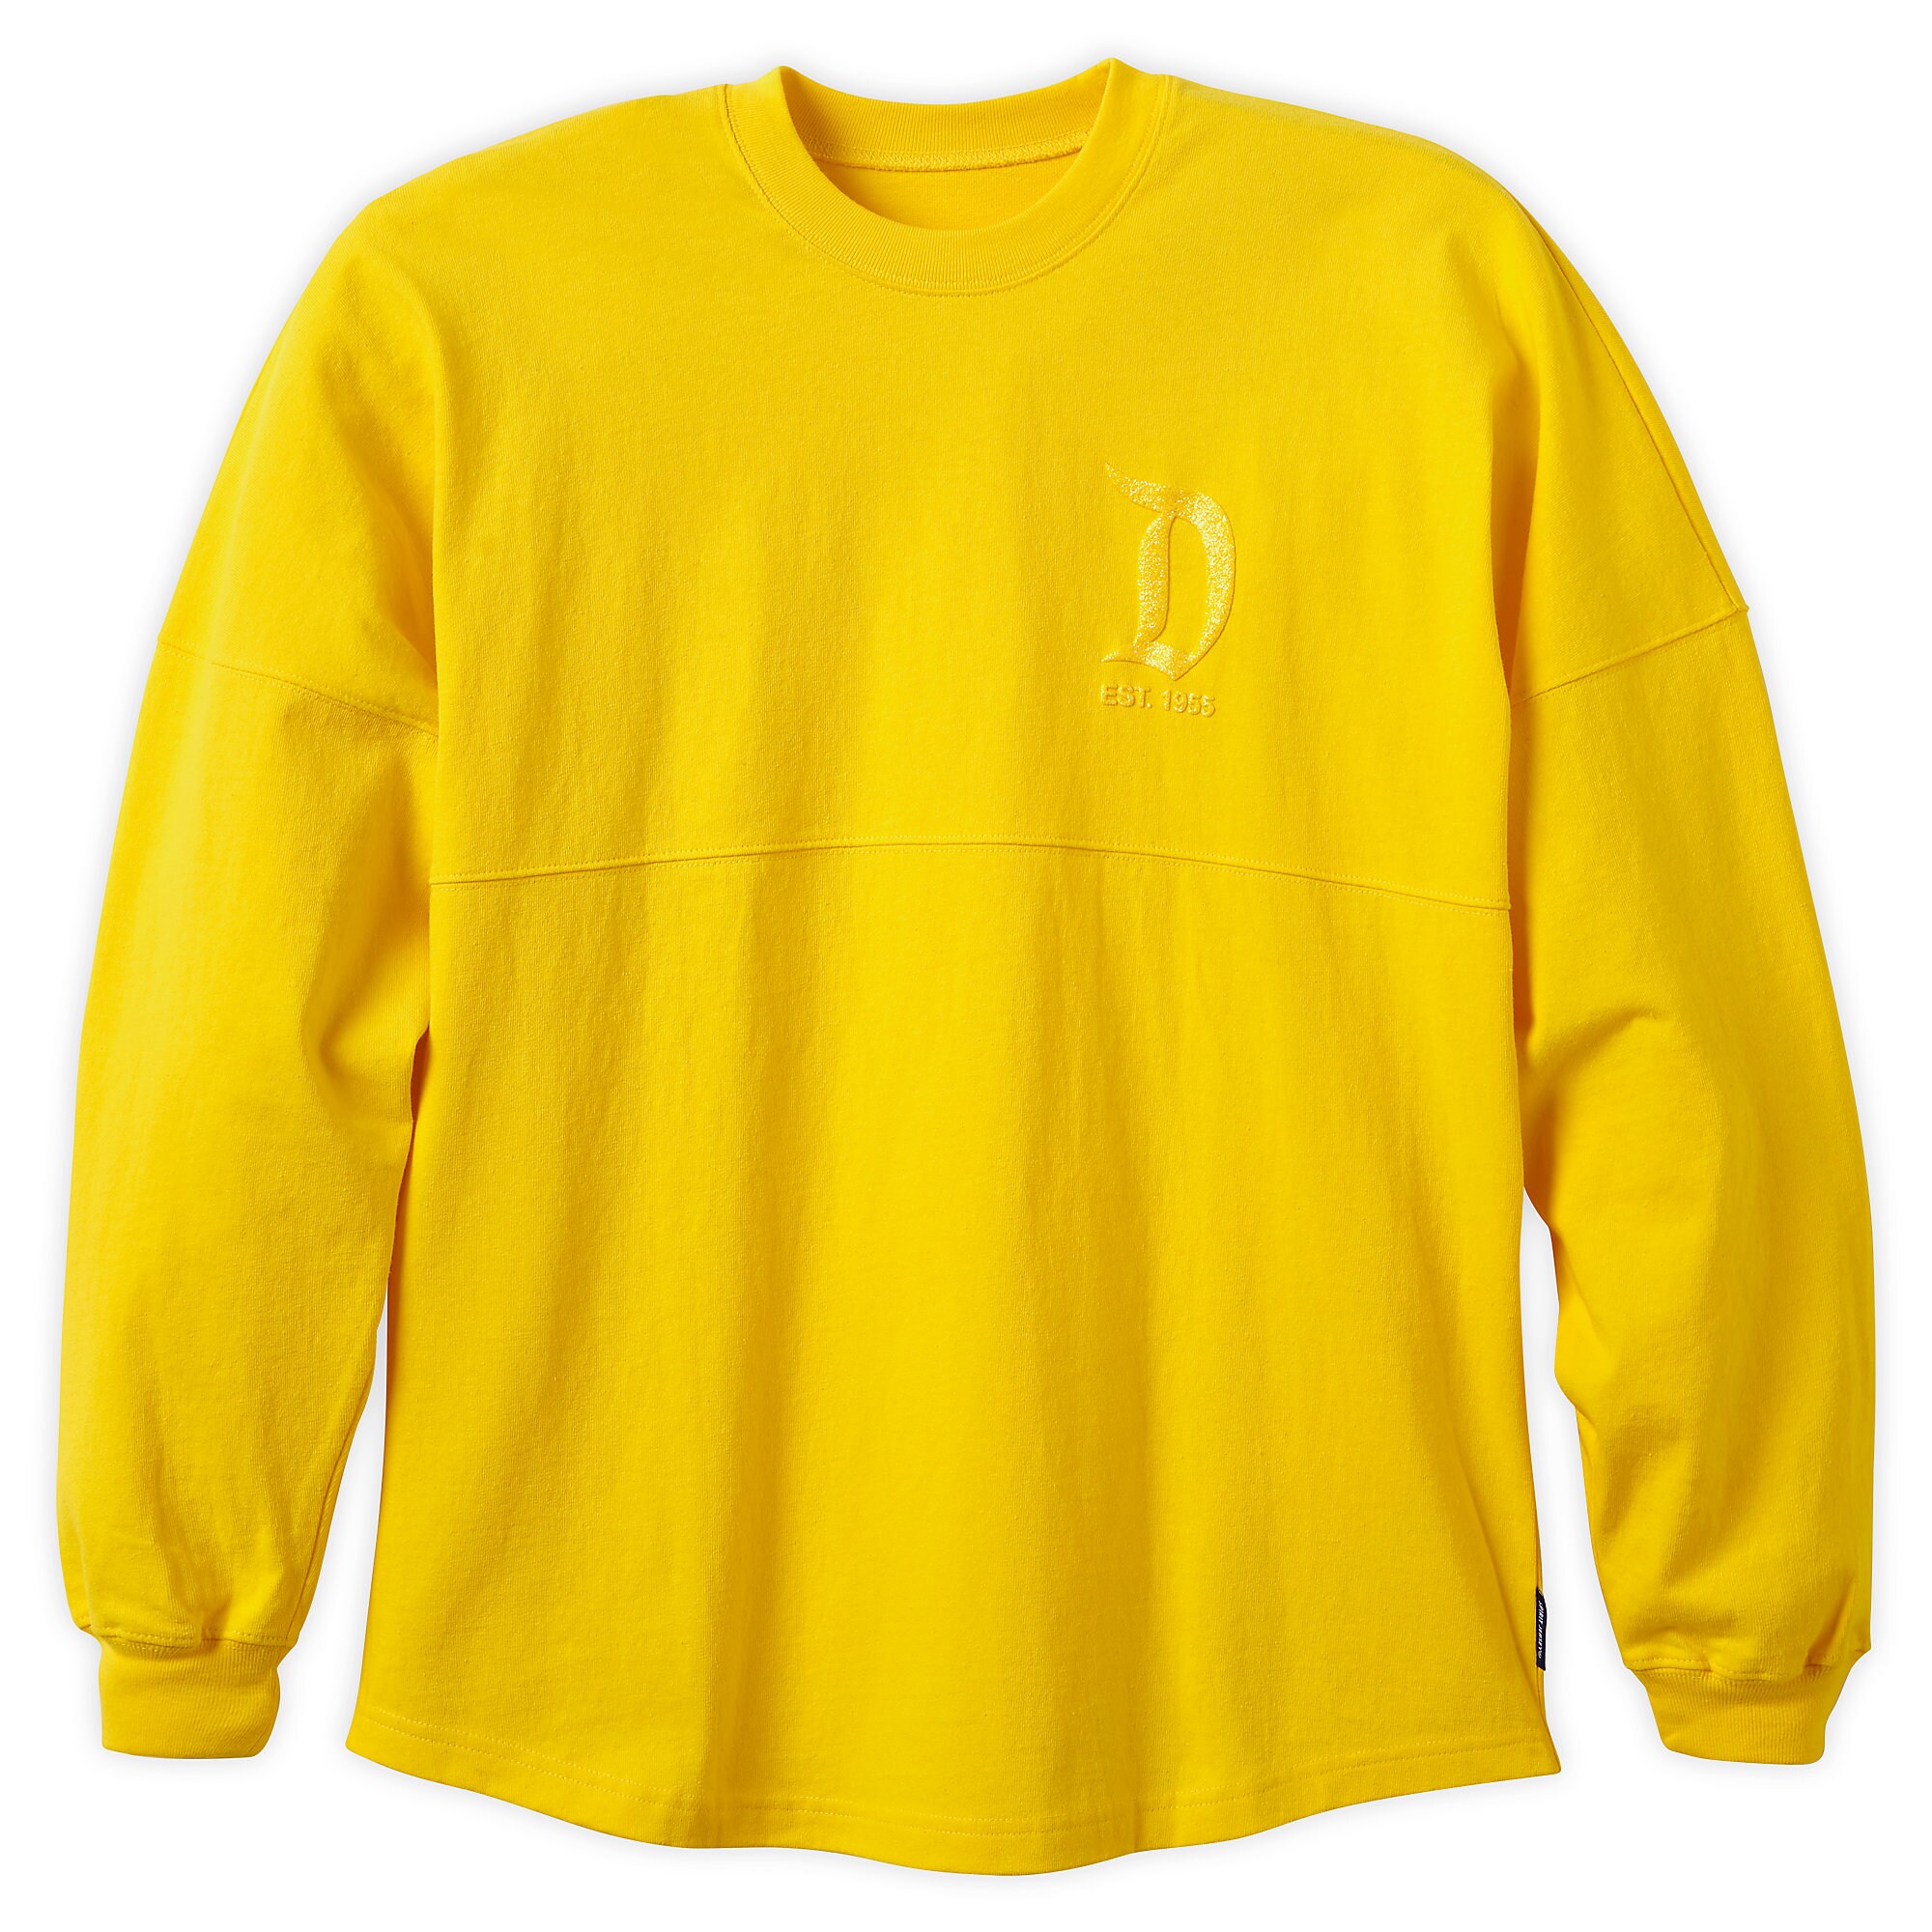 Disneyland Spirit Jersey for Adults - Dapper Yellow